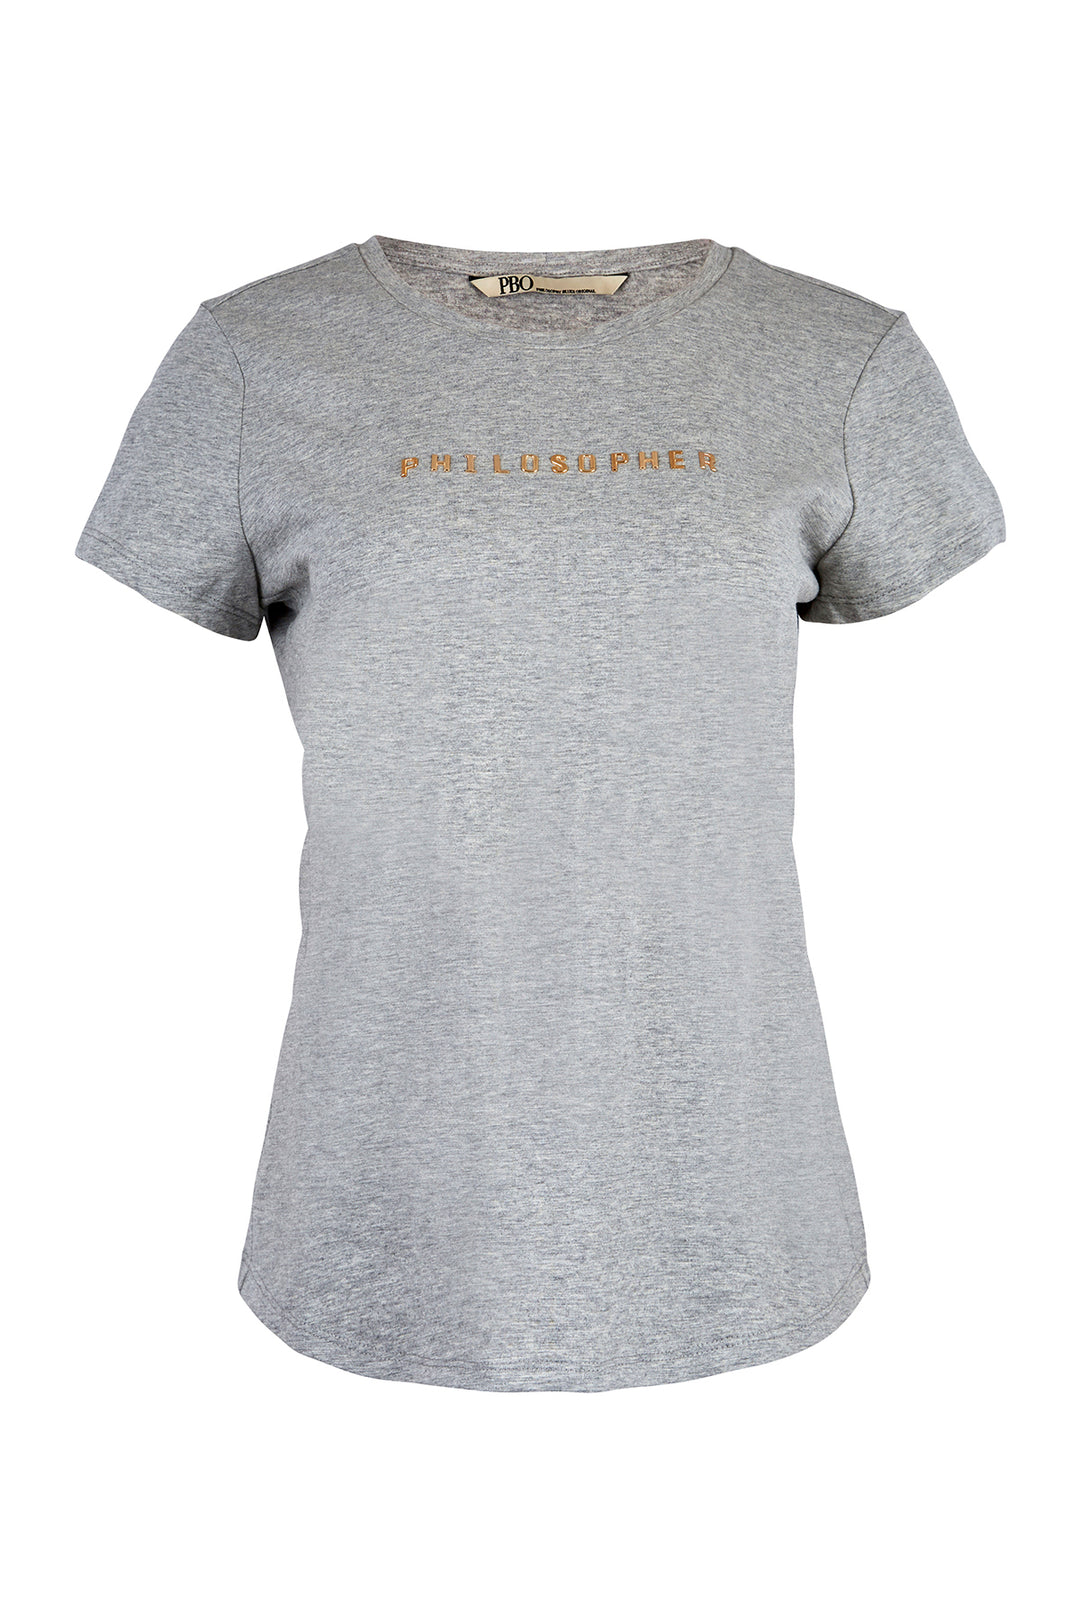 PBO Philosopher T-shirt T-SHIRTS 17 Grey